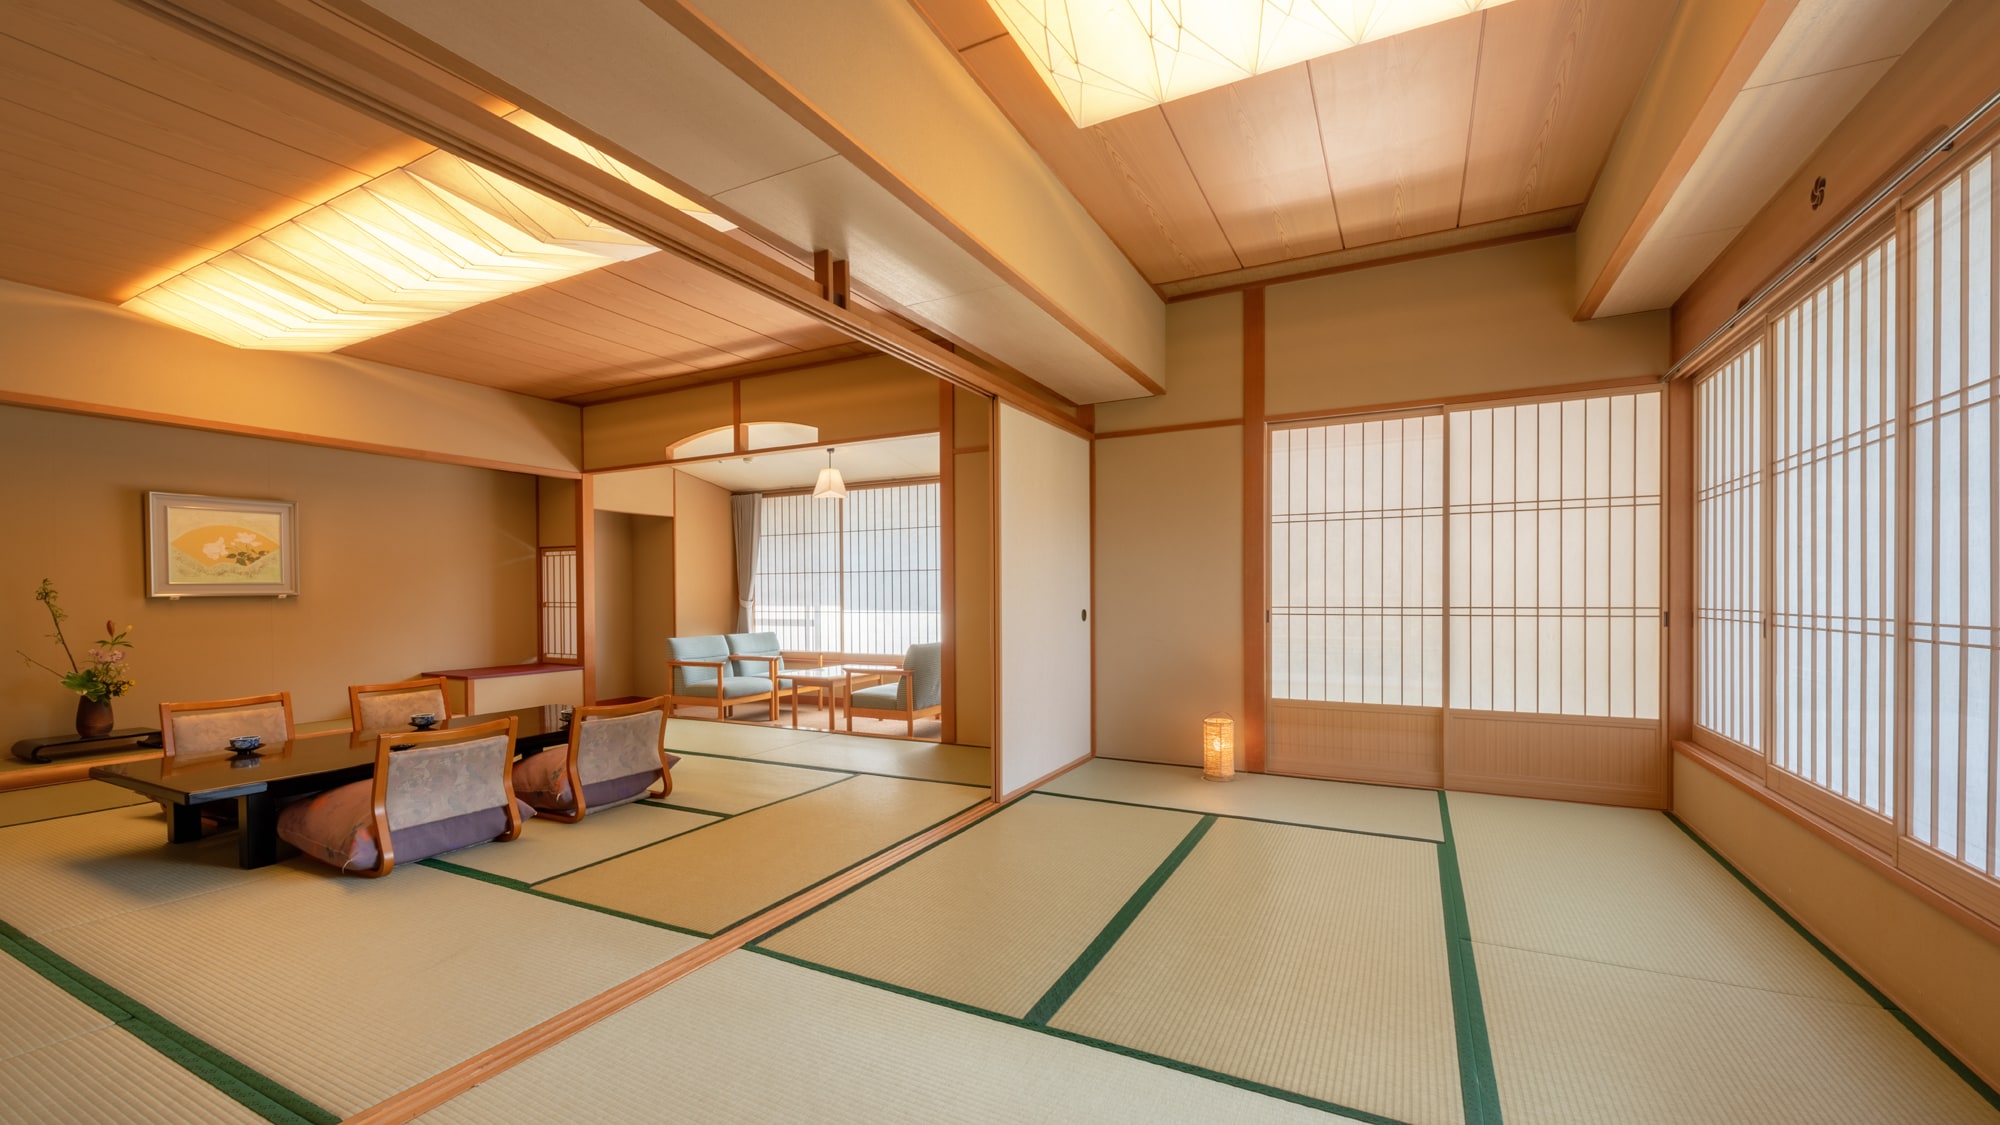 ◆ Hanafukan <Japanese-style room 2 rooms>